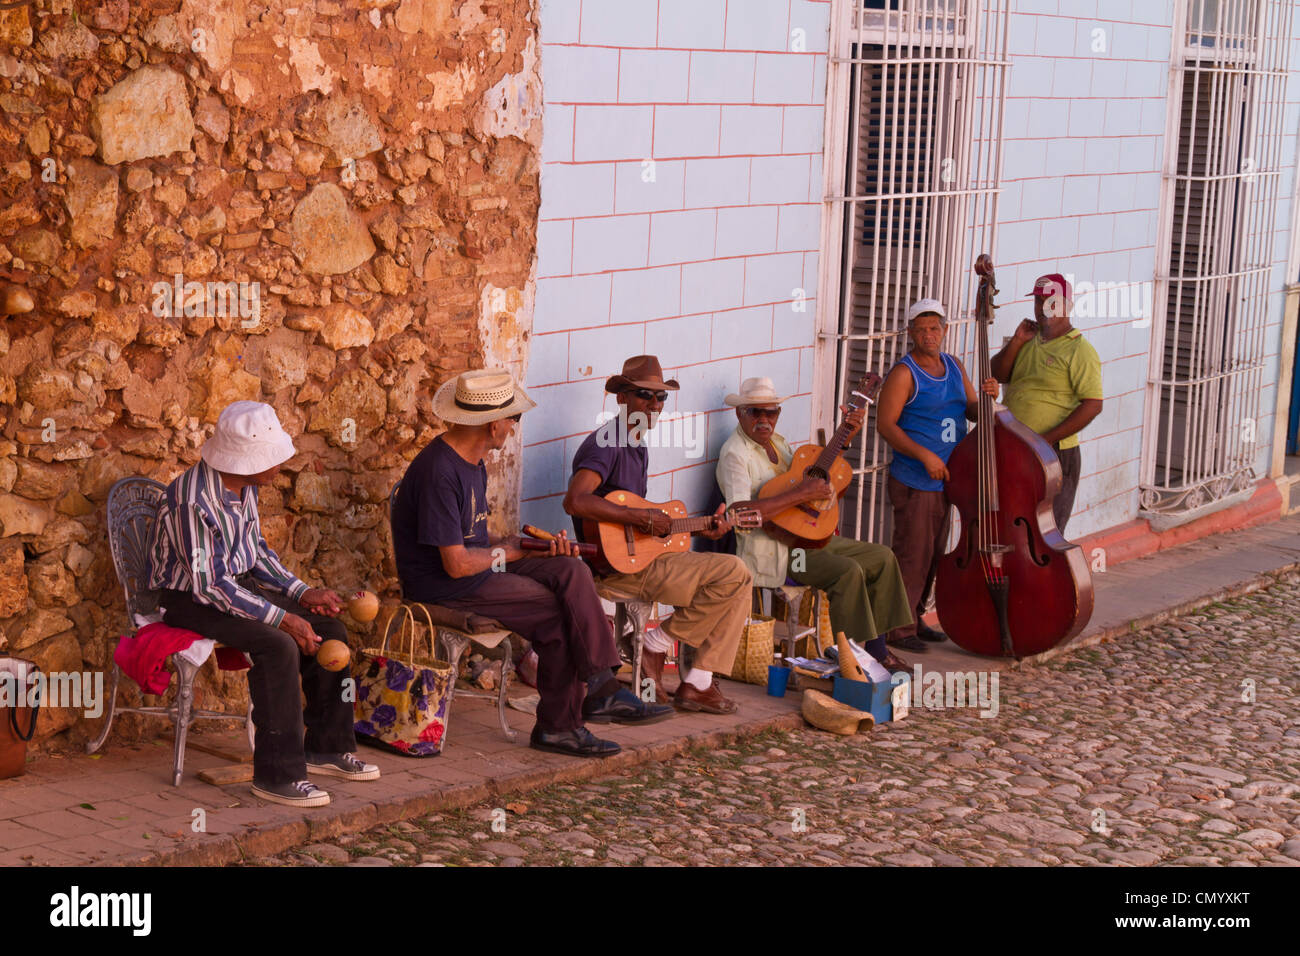 Straße Instrumentalstücken in Trinidad, Kuba, große Antillen, Antillen, Karibik, Westindien, Mittelamerika, Nordamerika, Amerika Stockfoto